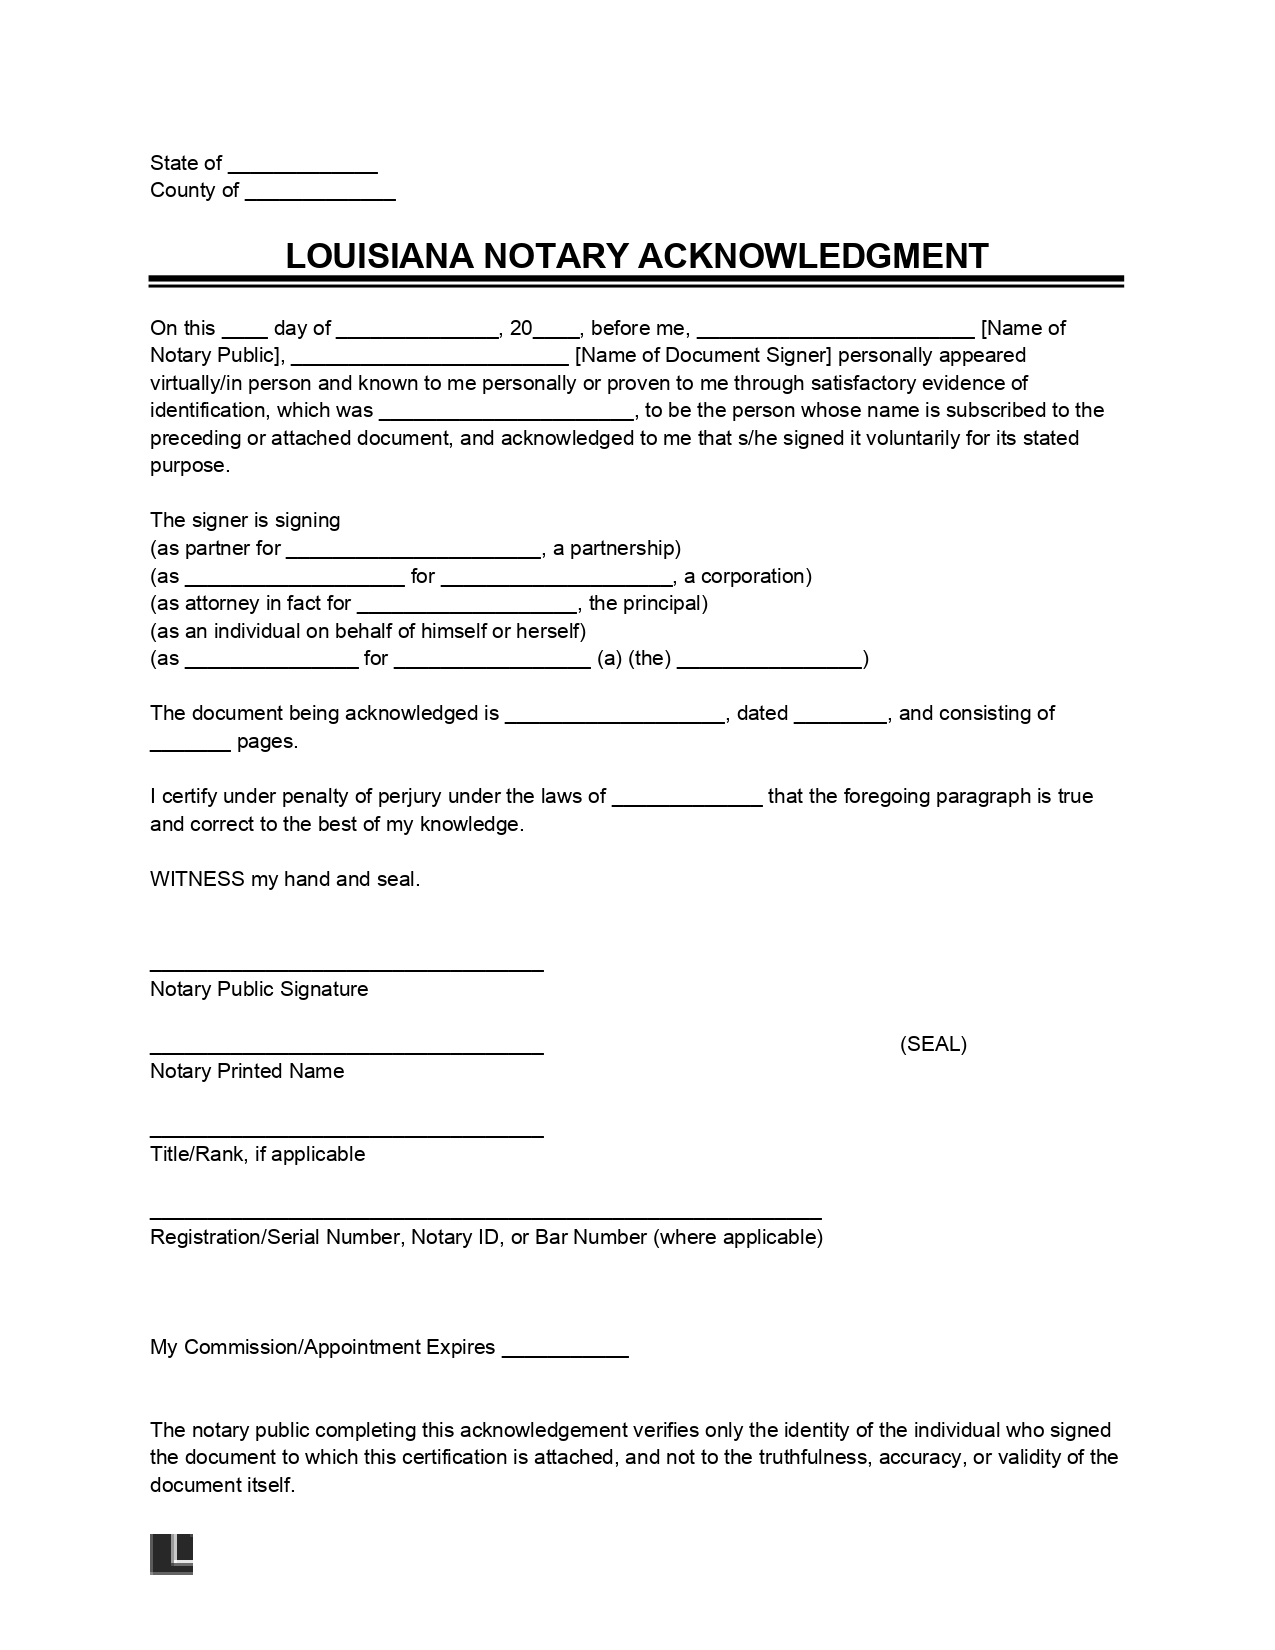 Louisiana Notary Acknowledgement Form